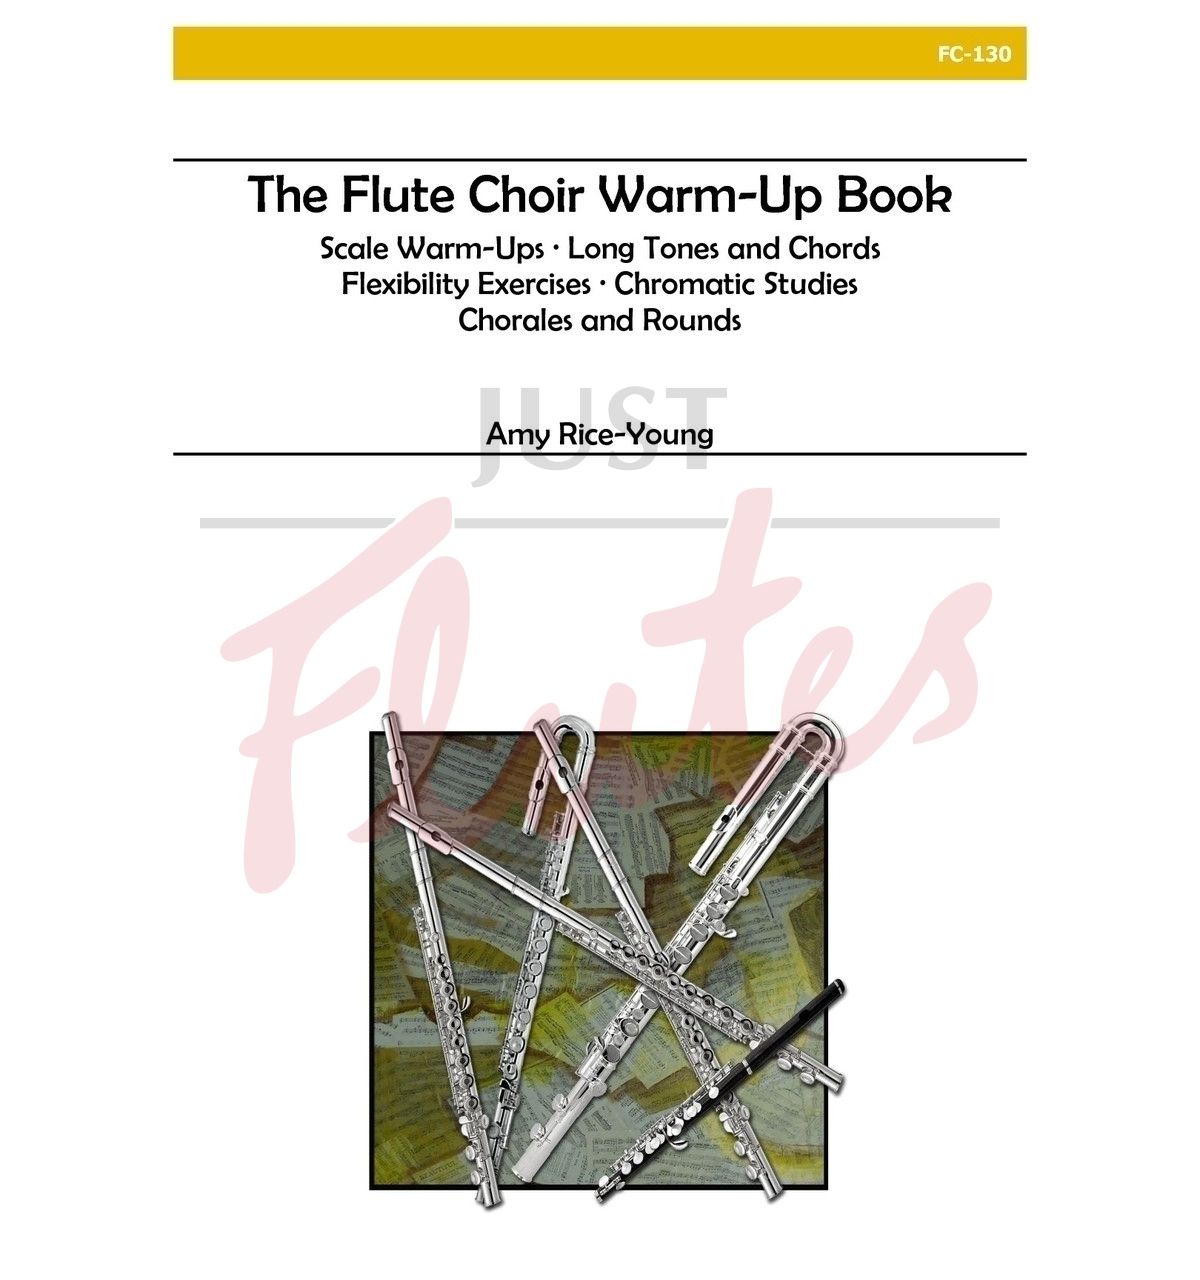 The Flute Choir Warm-Up Book